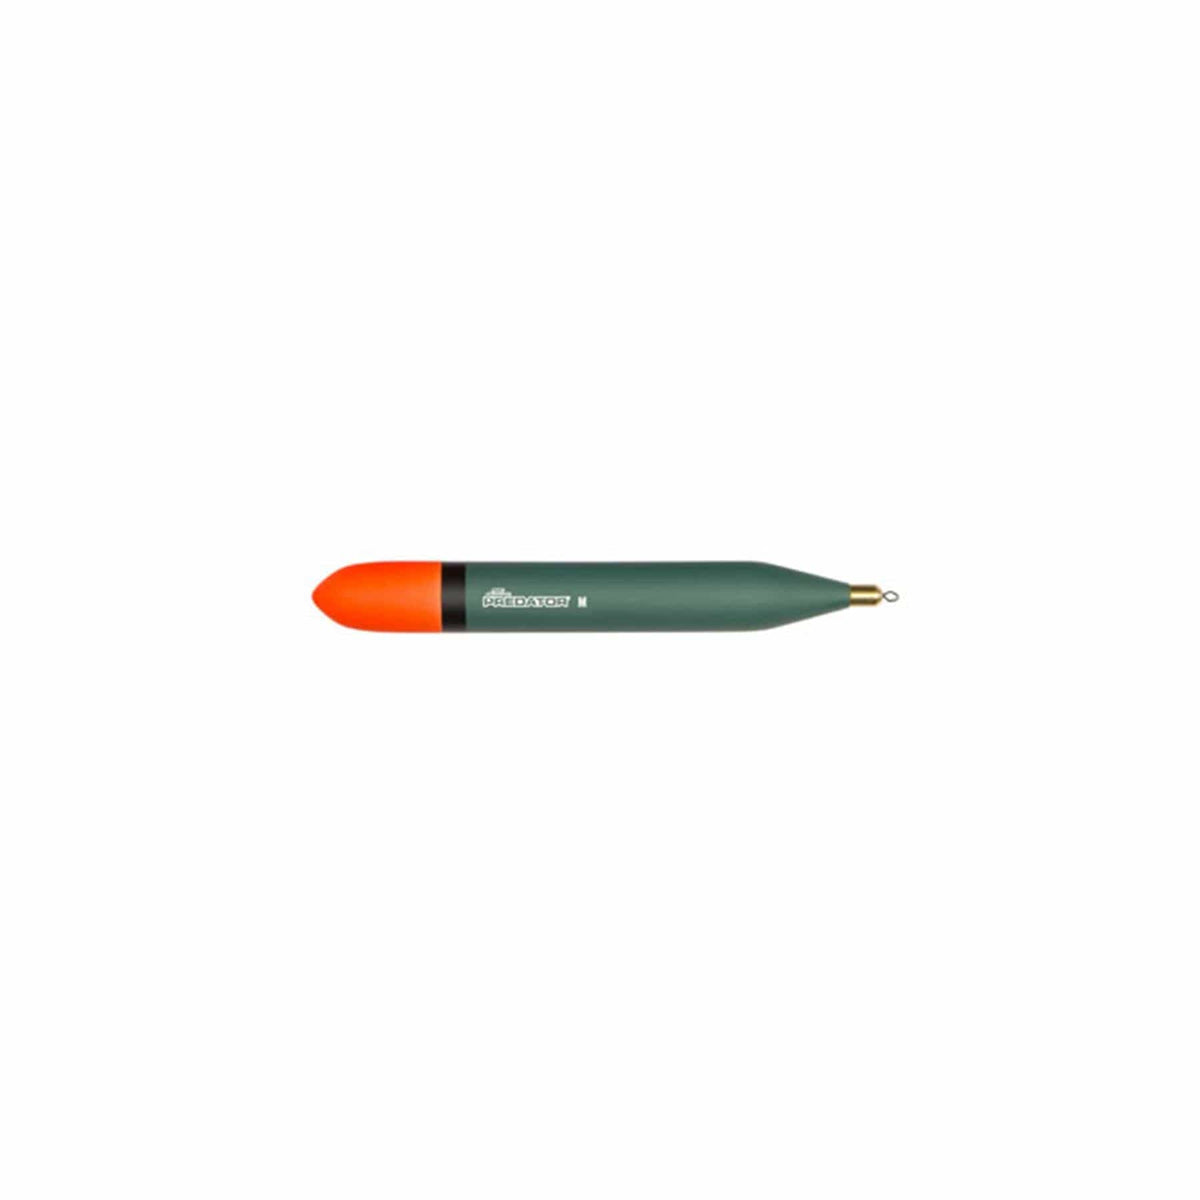 FOX Rage Predator HD Loaded Pencil - Medium.